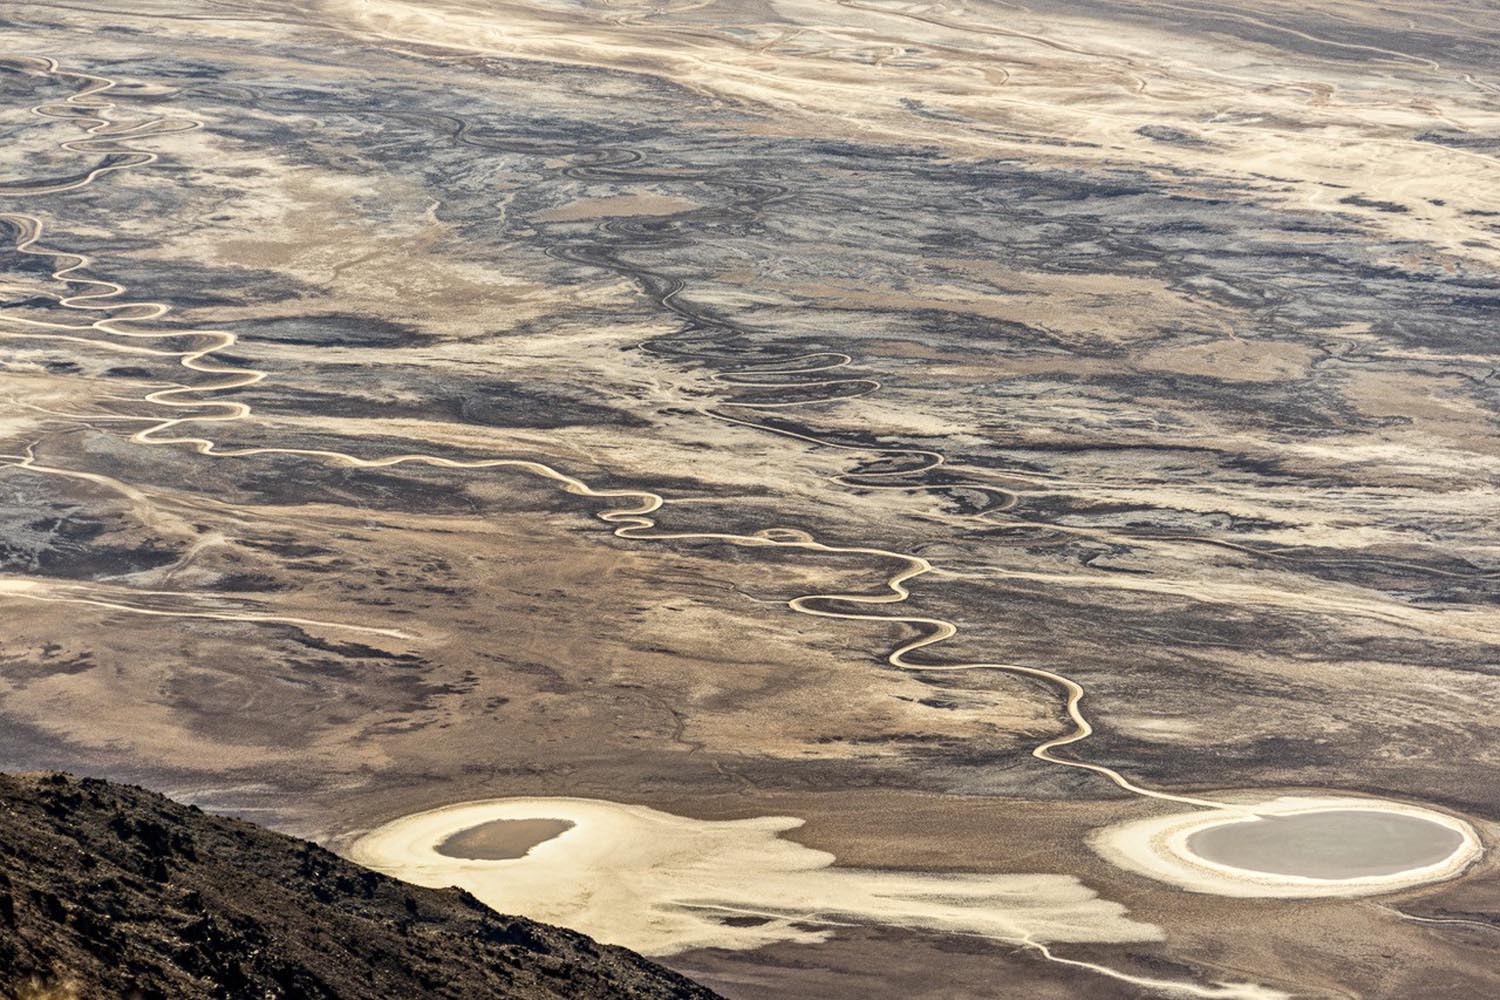 Mark Indig: Death Valley - California